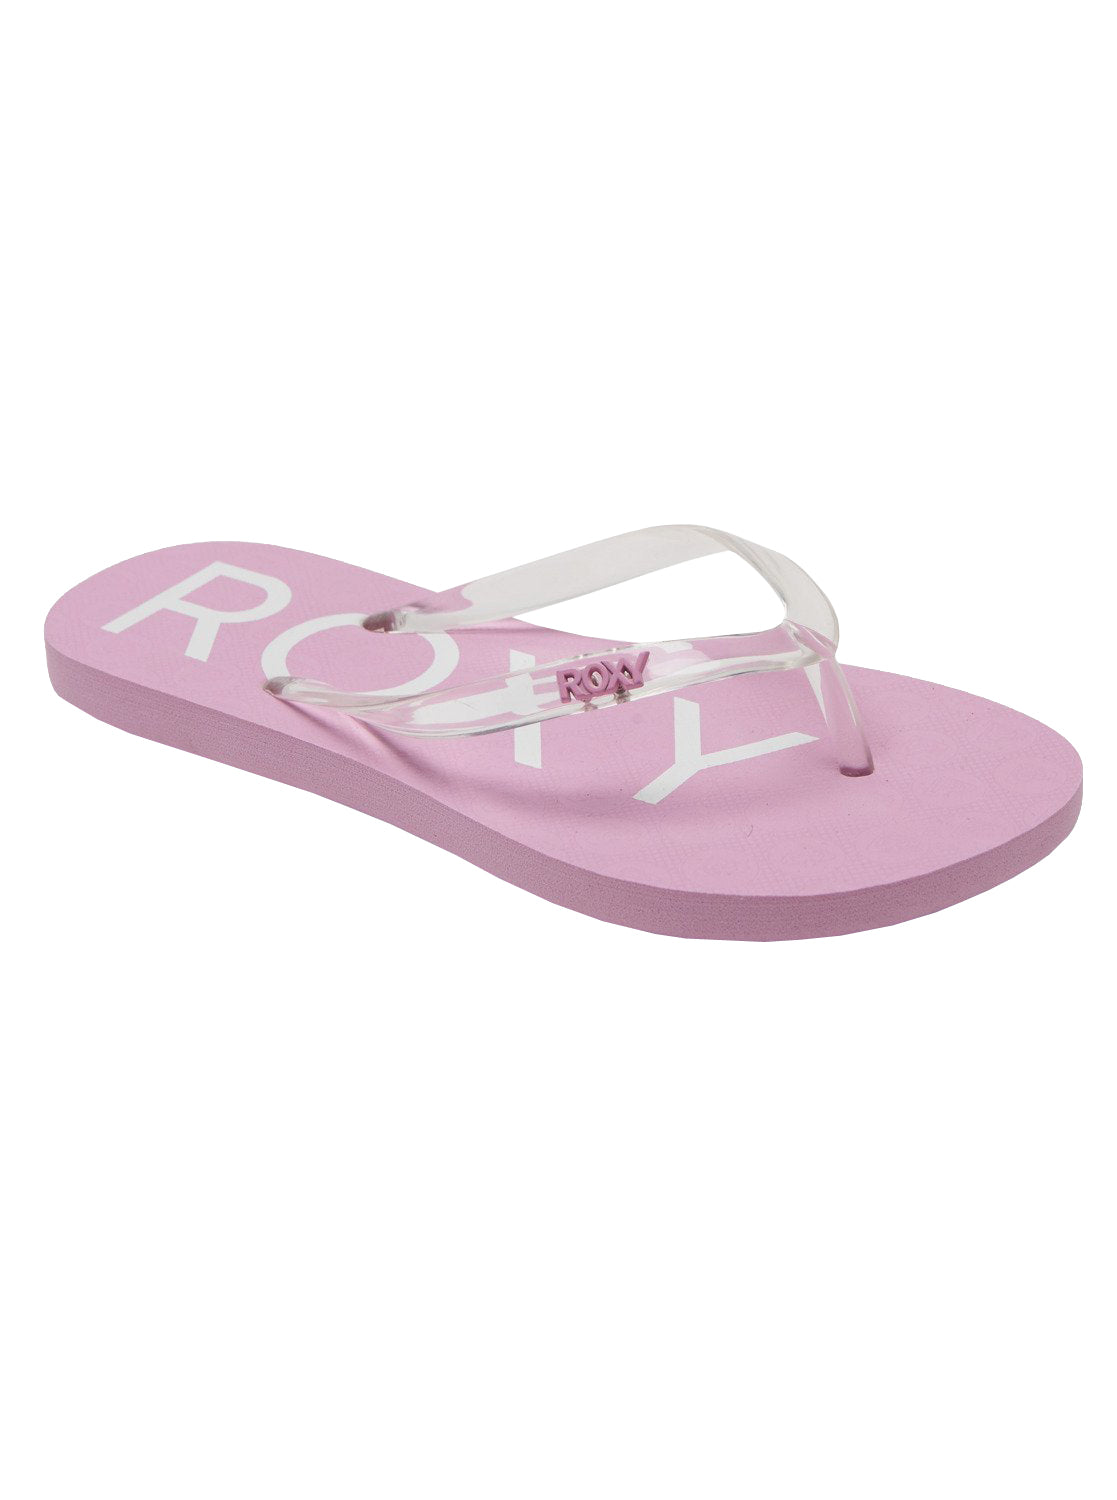 Roxy Viva Jelly Girls Sandal LRS-Lilac Rose 12 C